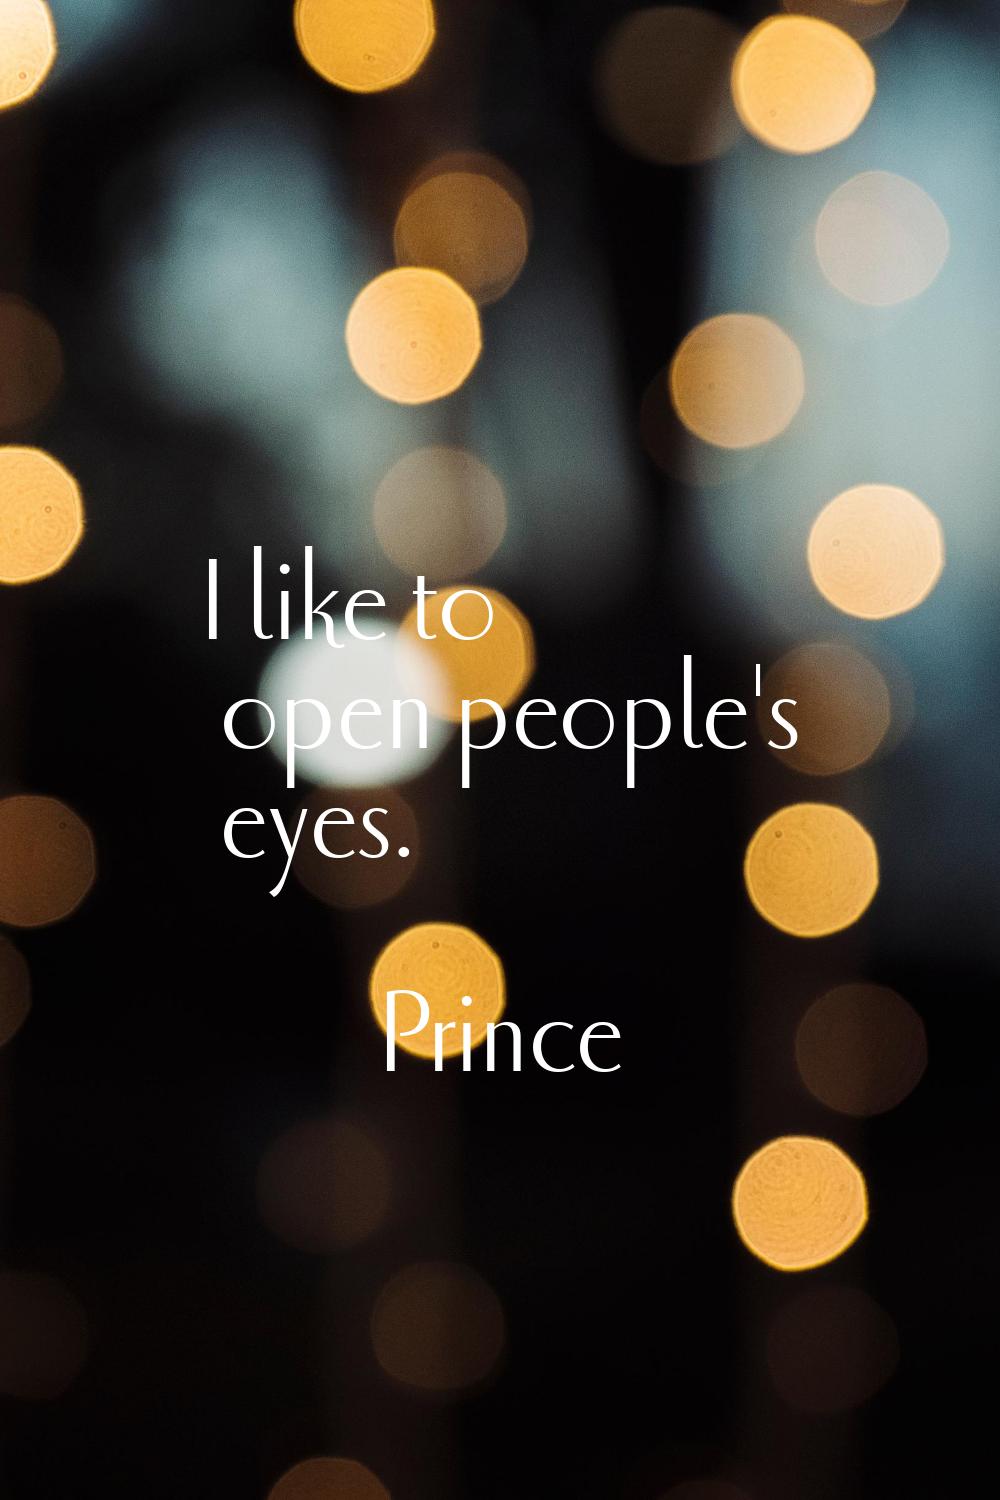 I like to open people's eyes.